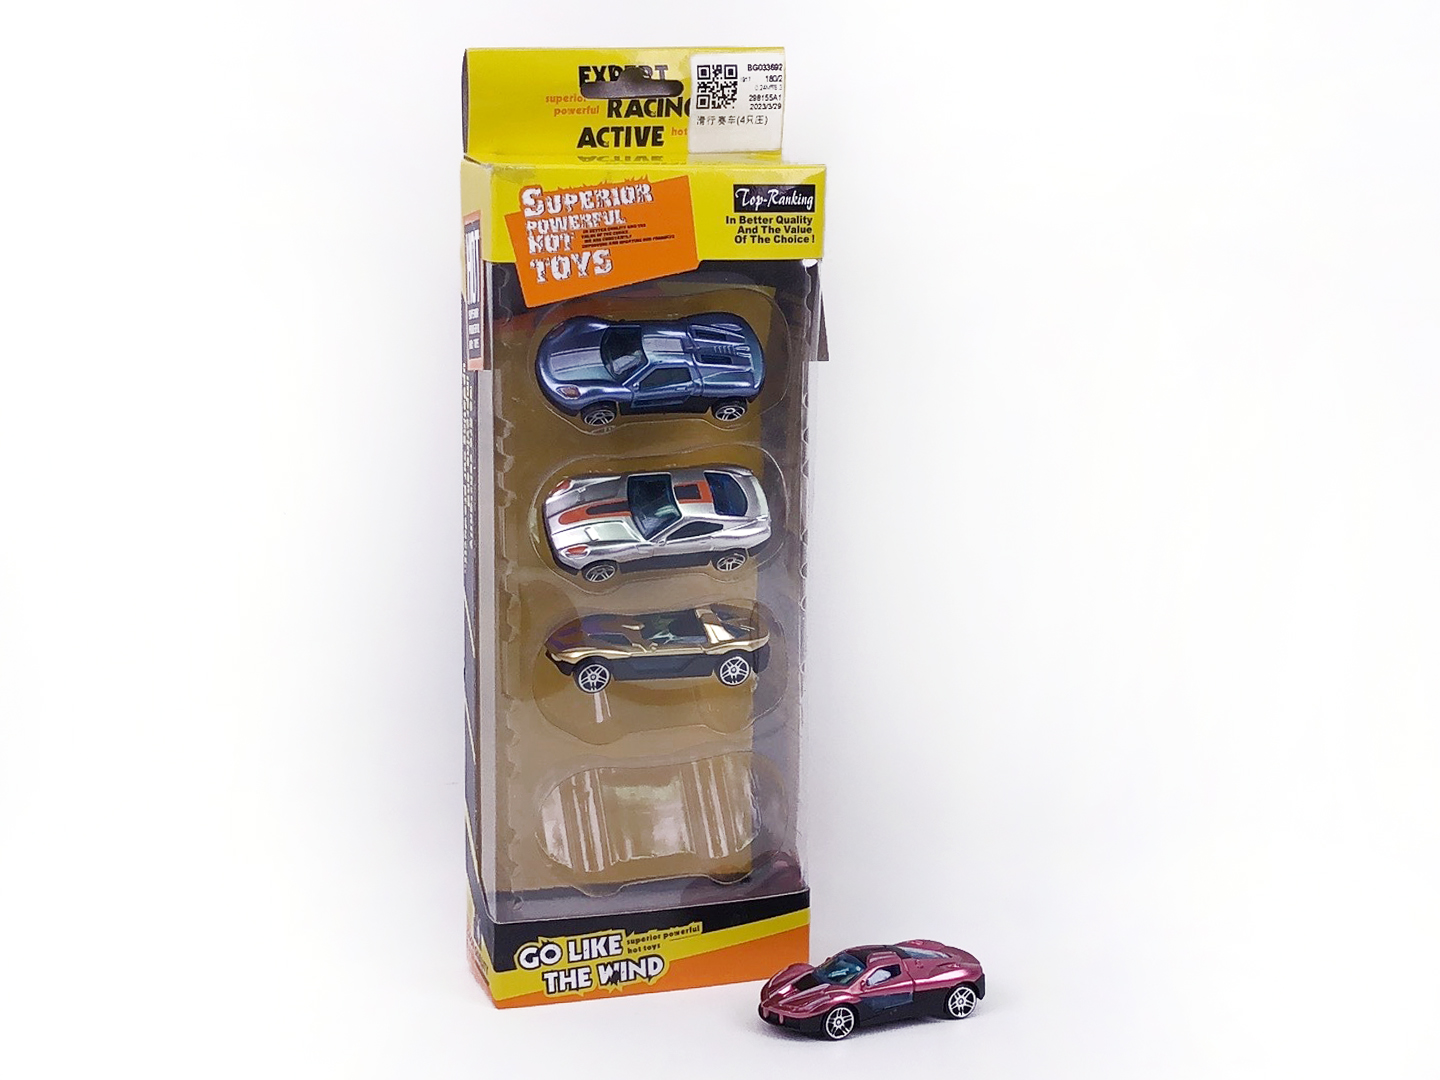 Free Wheel Racing Car(4in1) toys